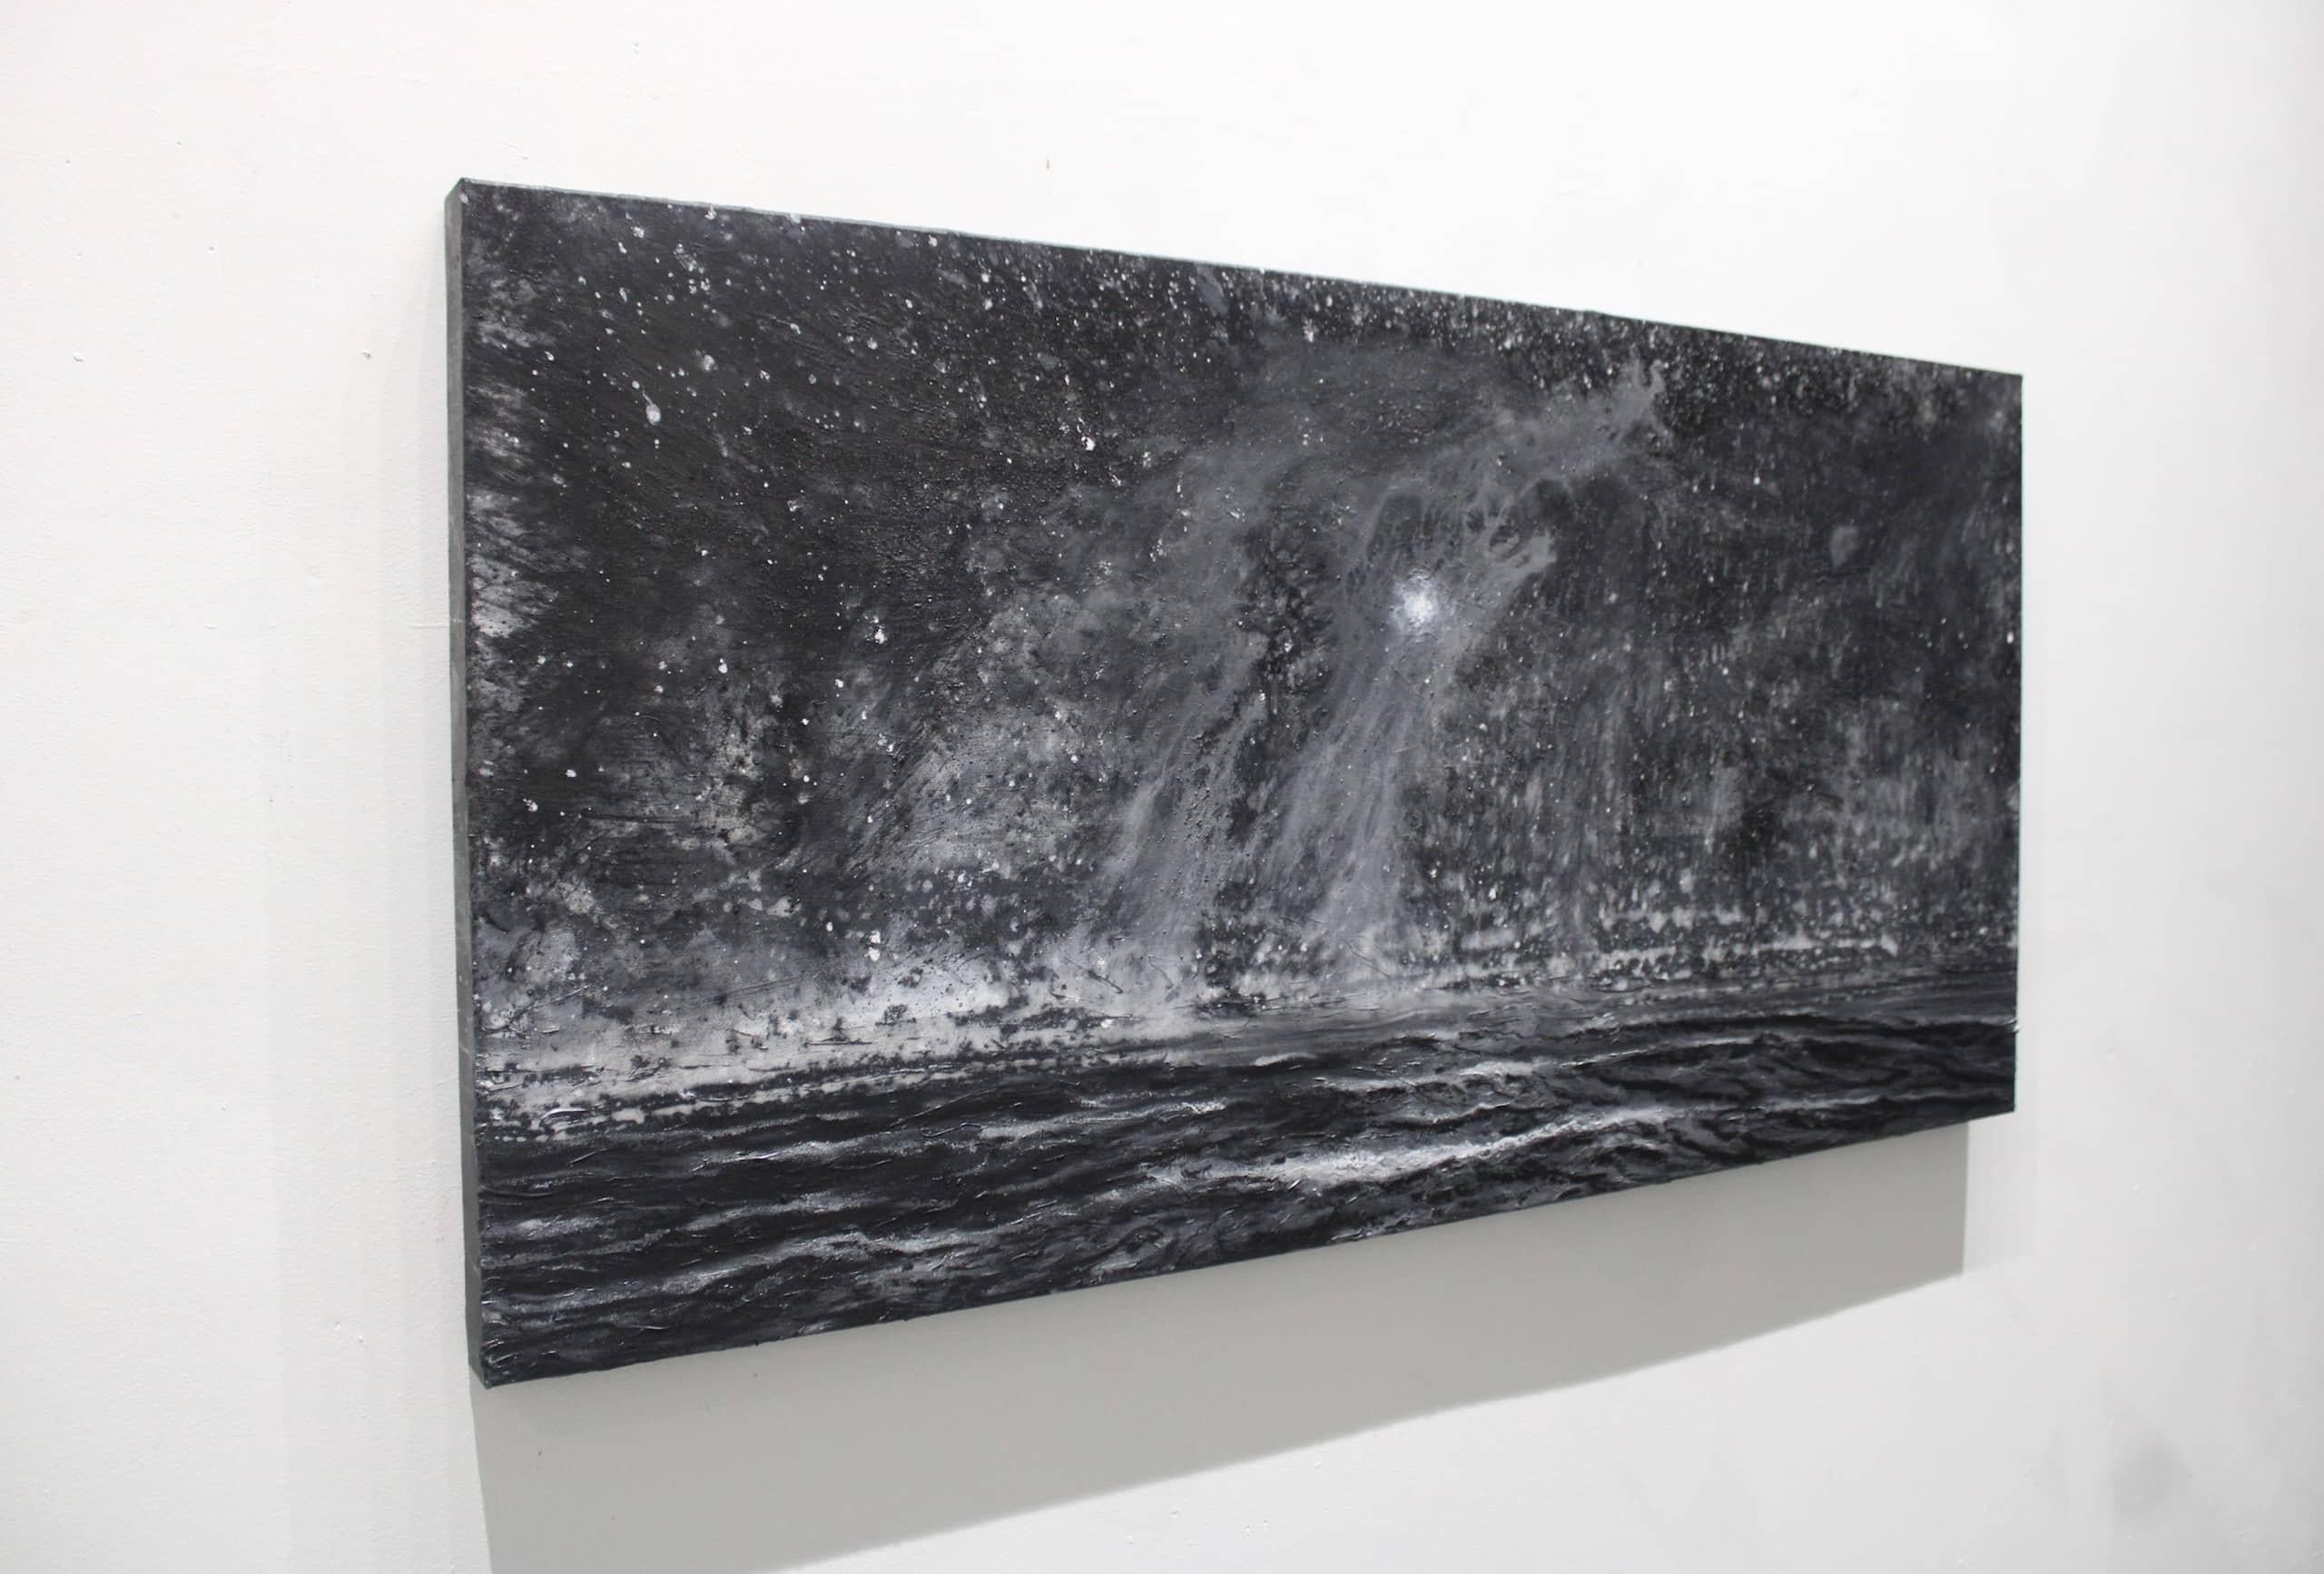 The deluge by Franco Salas Borquez - Black & white painting, ocean waves, sea For Sale 4